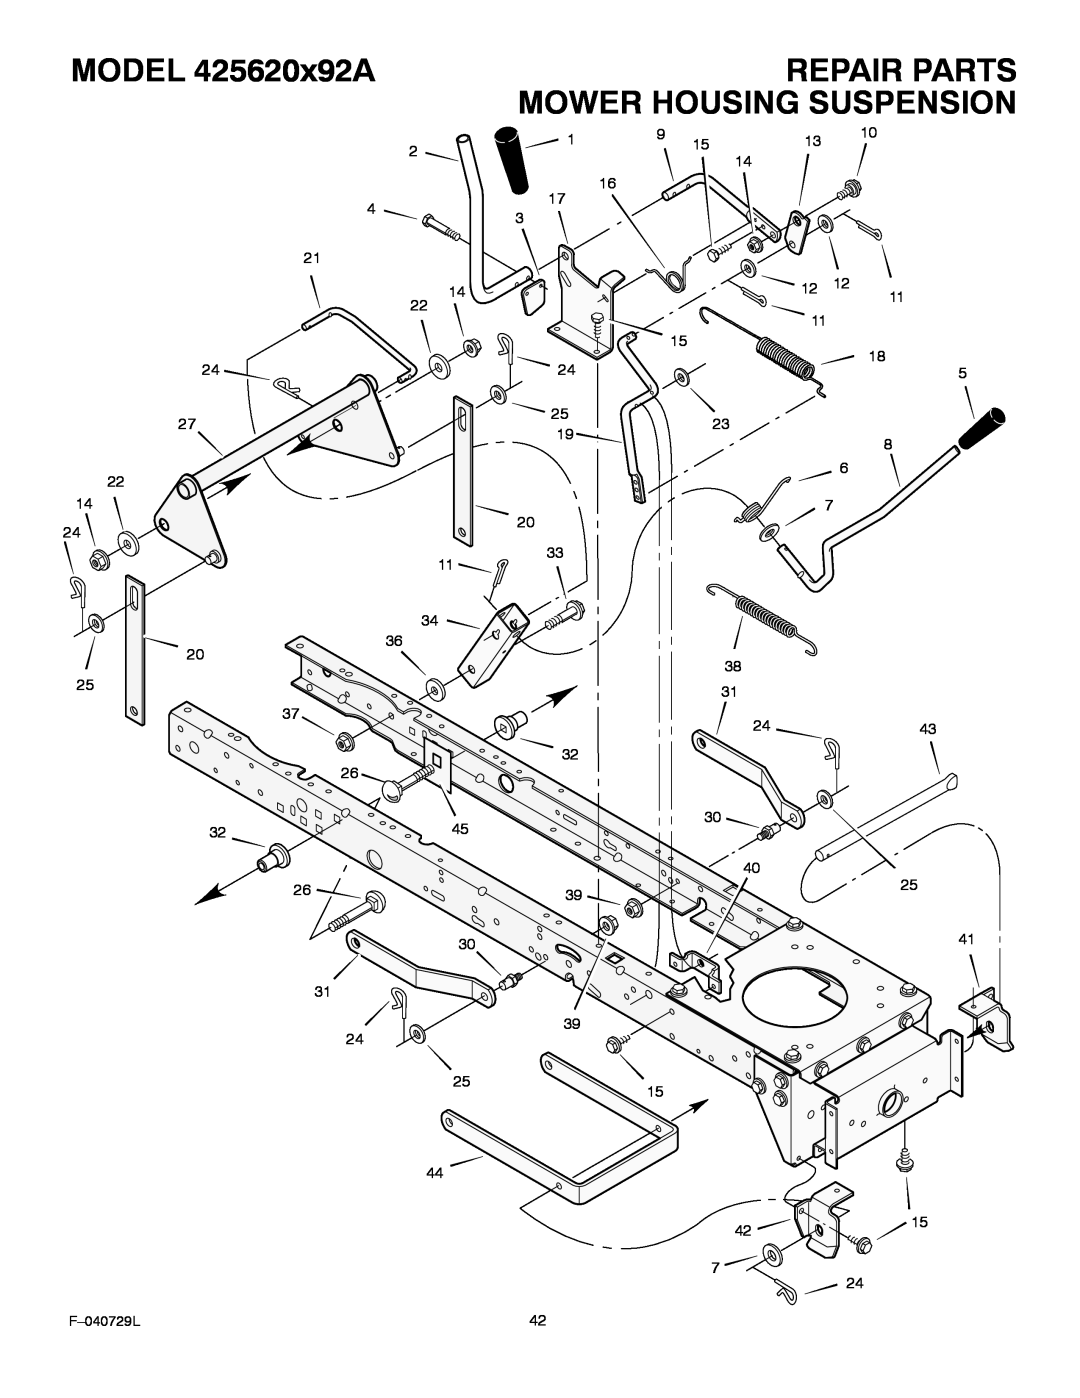 Murray manual Repair Parts Mower Housing Suspension, MODEL 425620x92A, F-040729L 